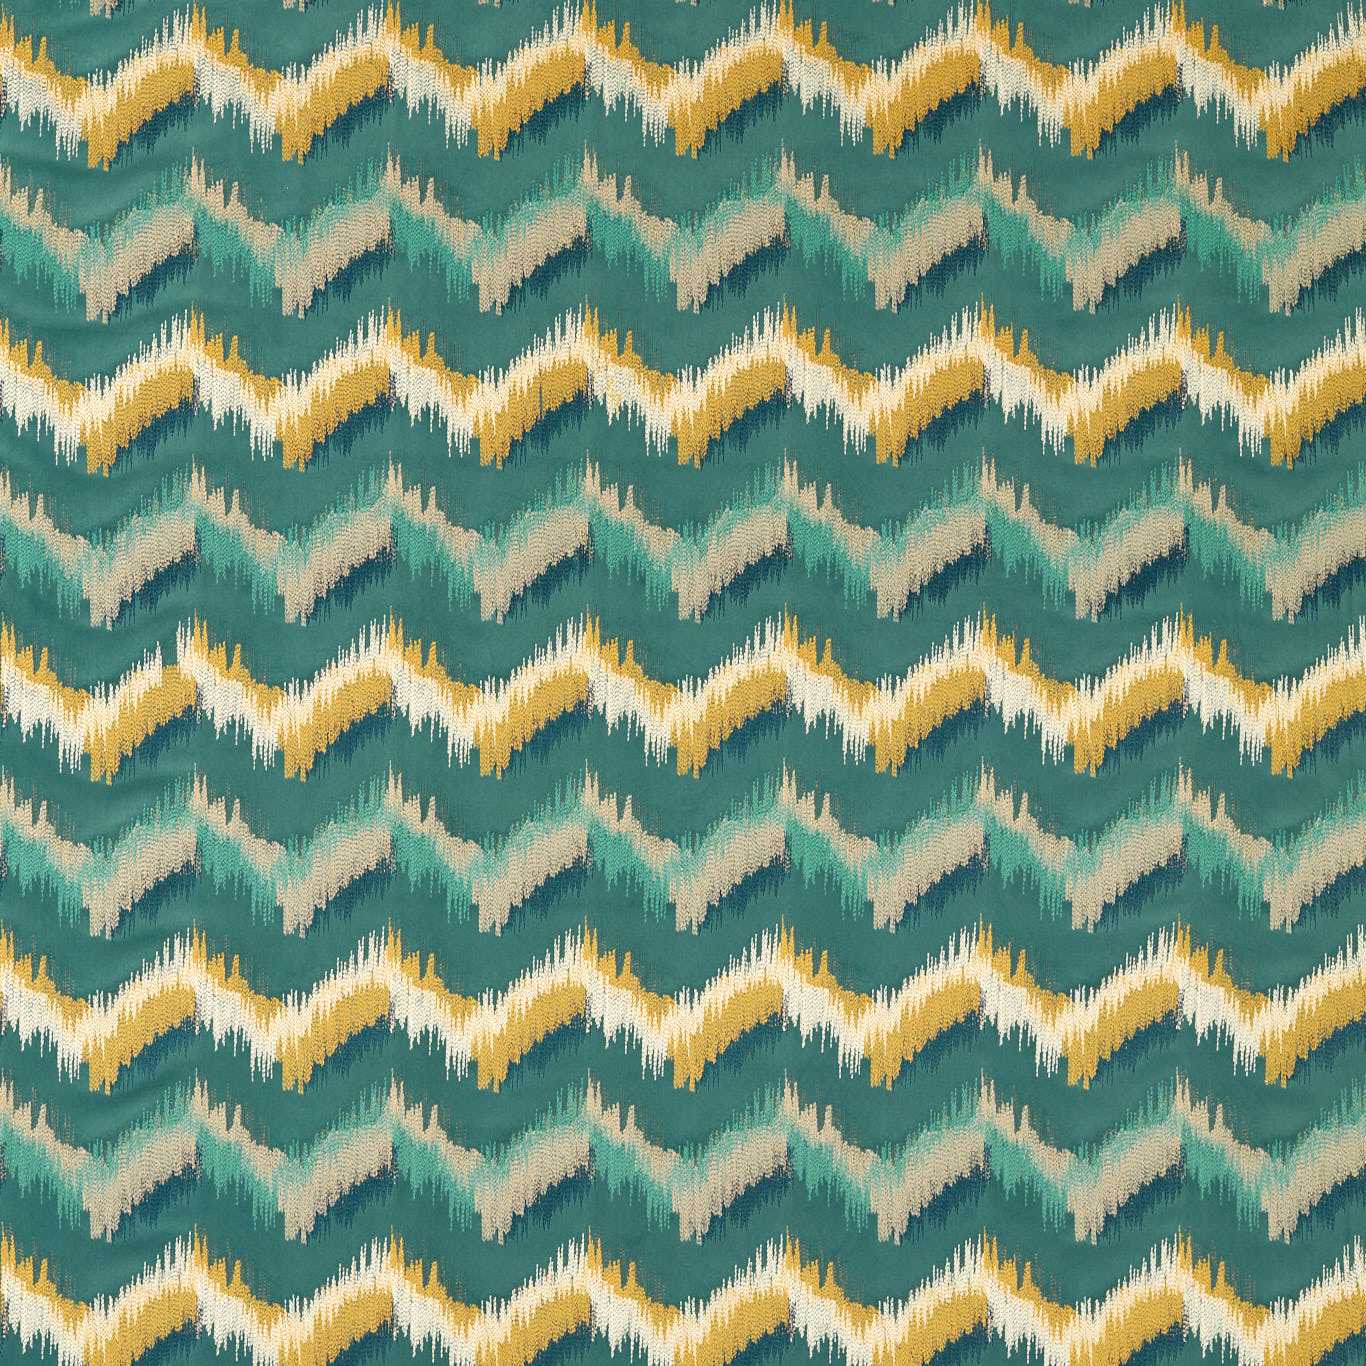 Sagoma Teal Fabric by CNC